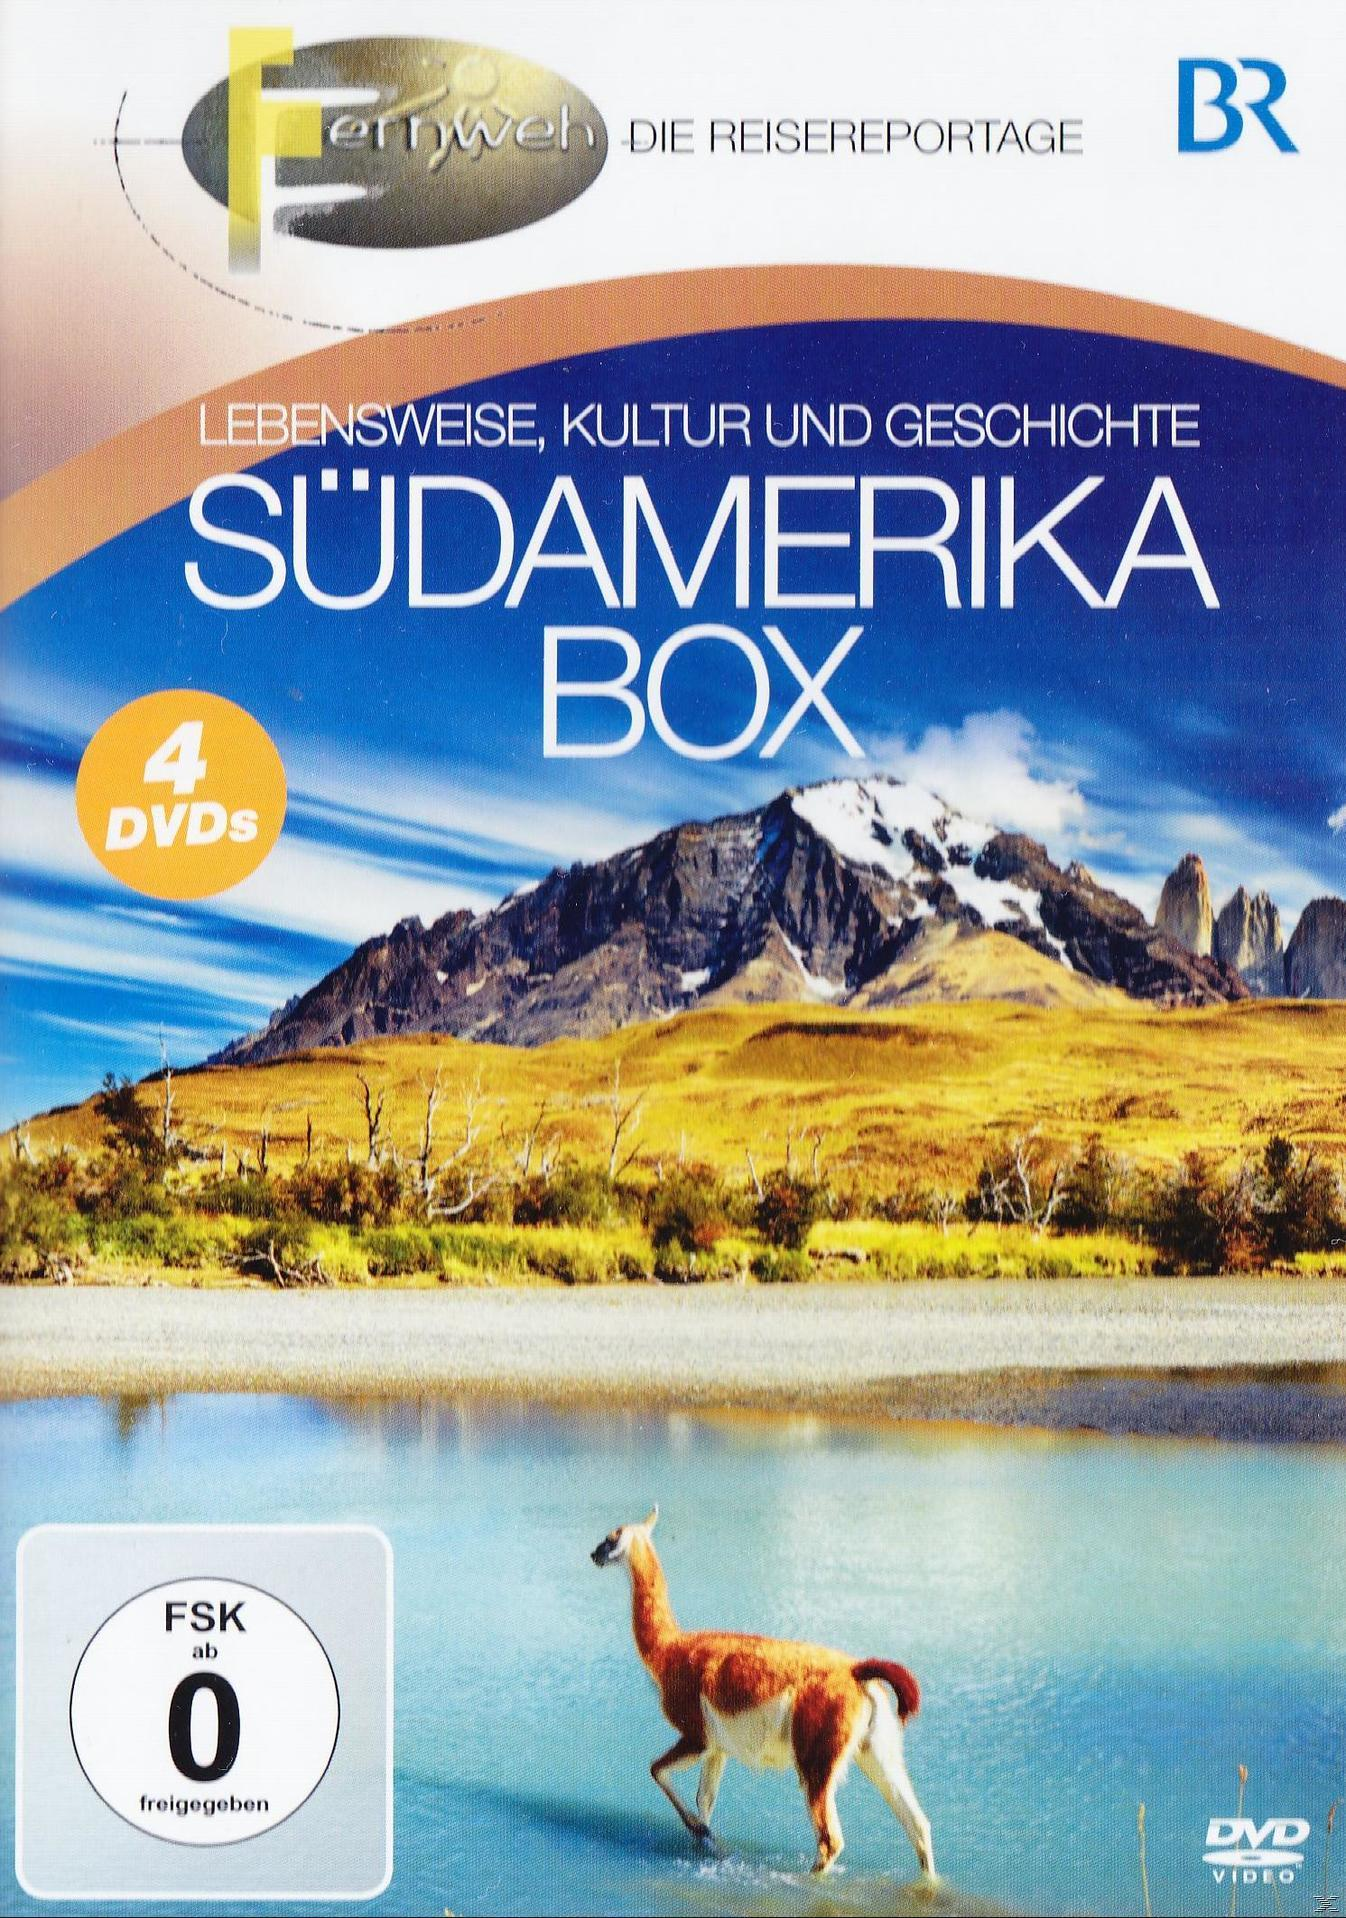 DVD Box Suedamerika